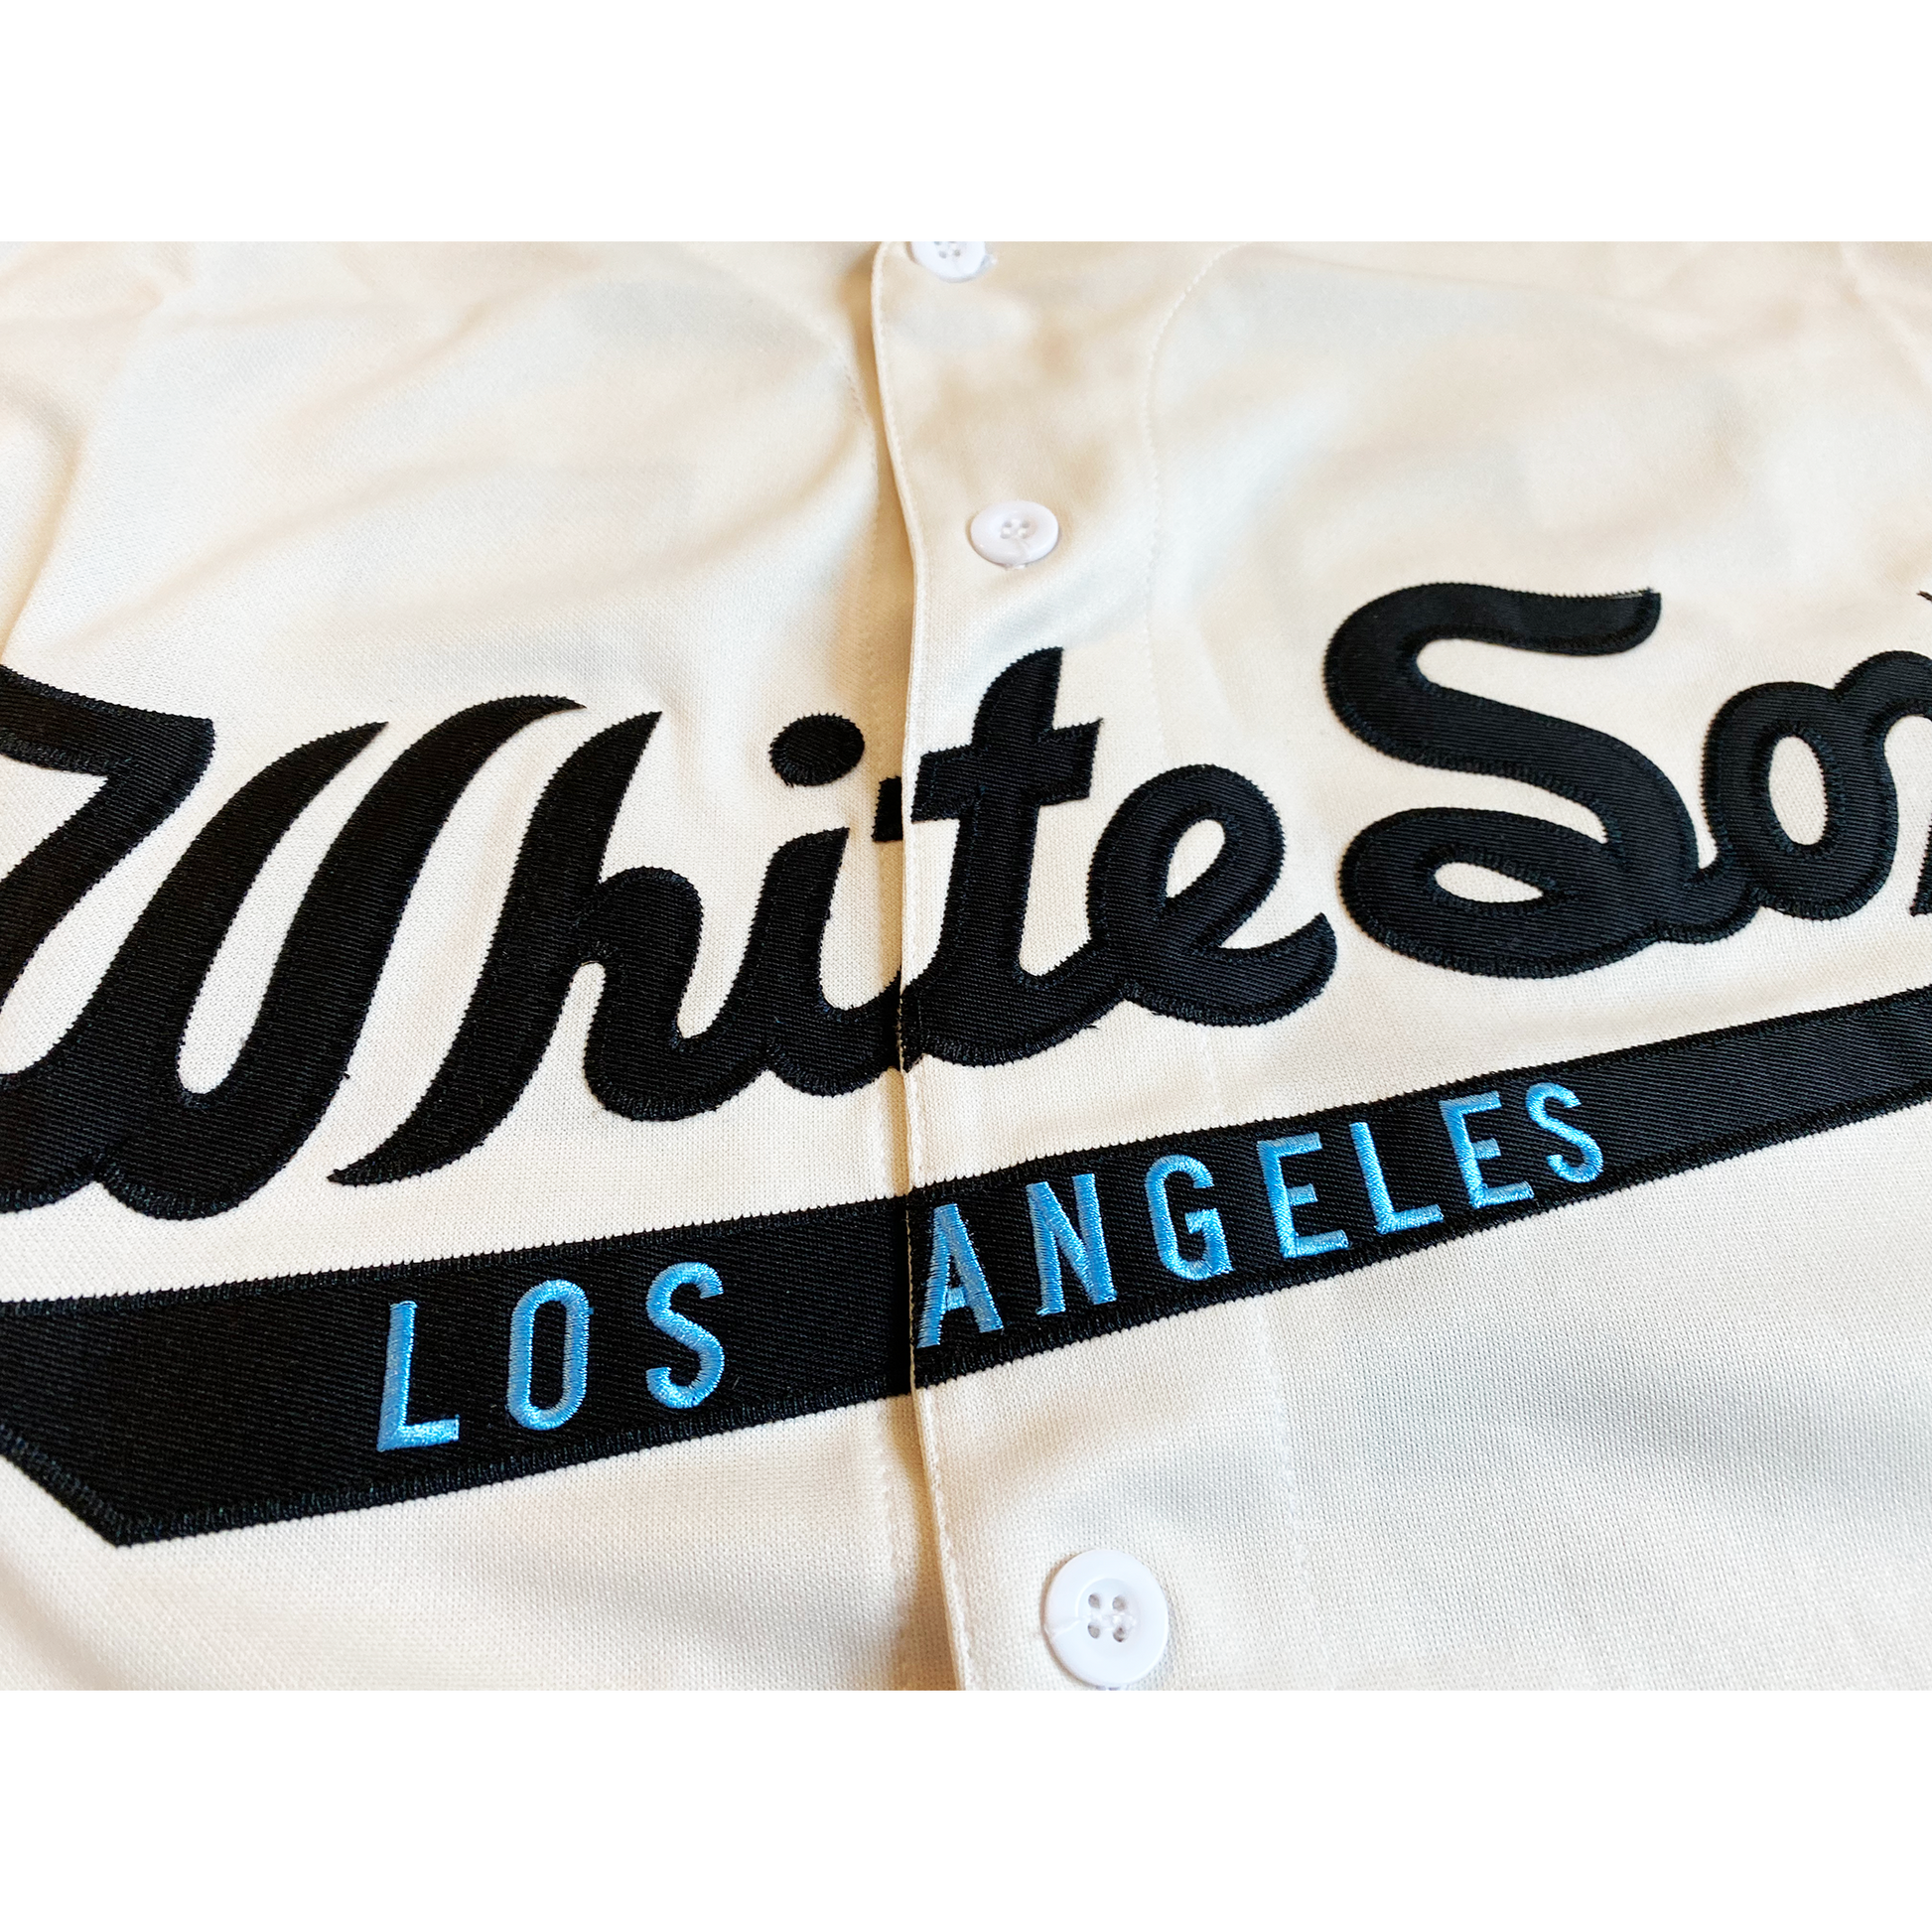 Los Angeles White Sox NLB Jersey, 2XL / Black